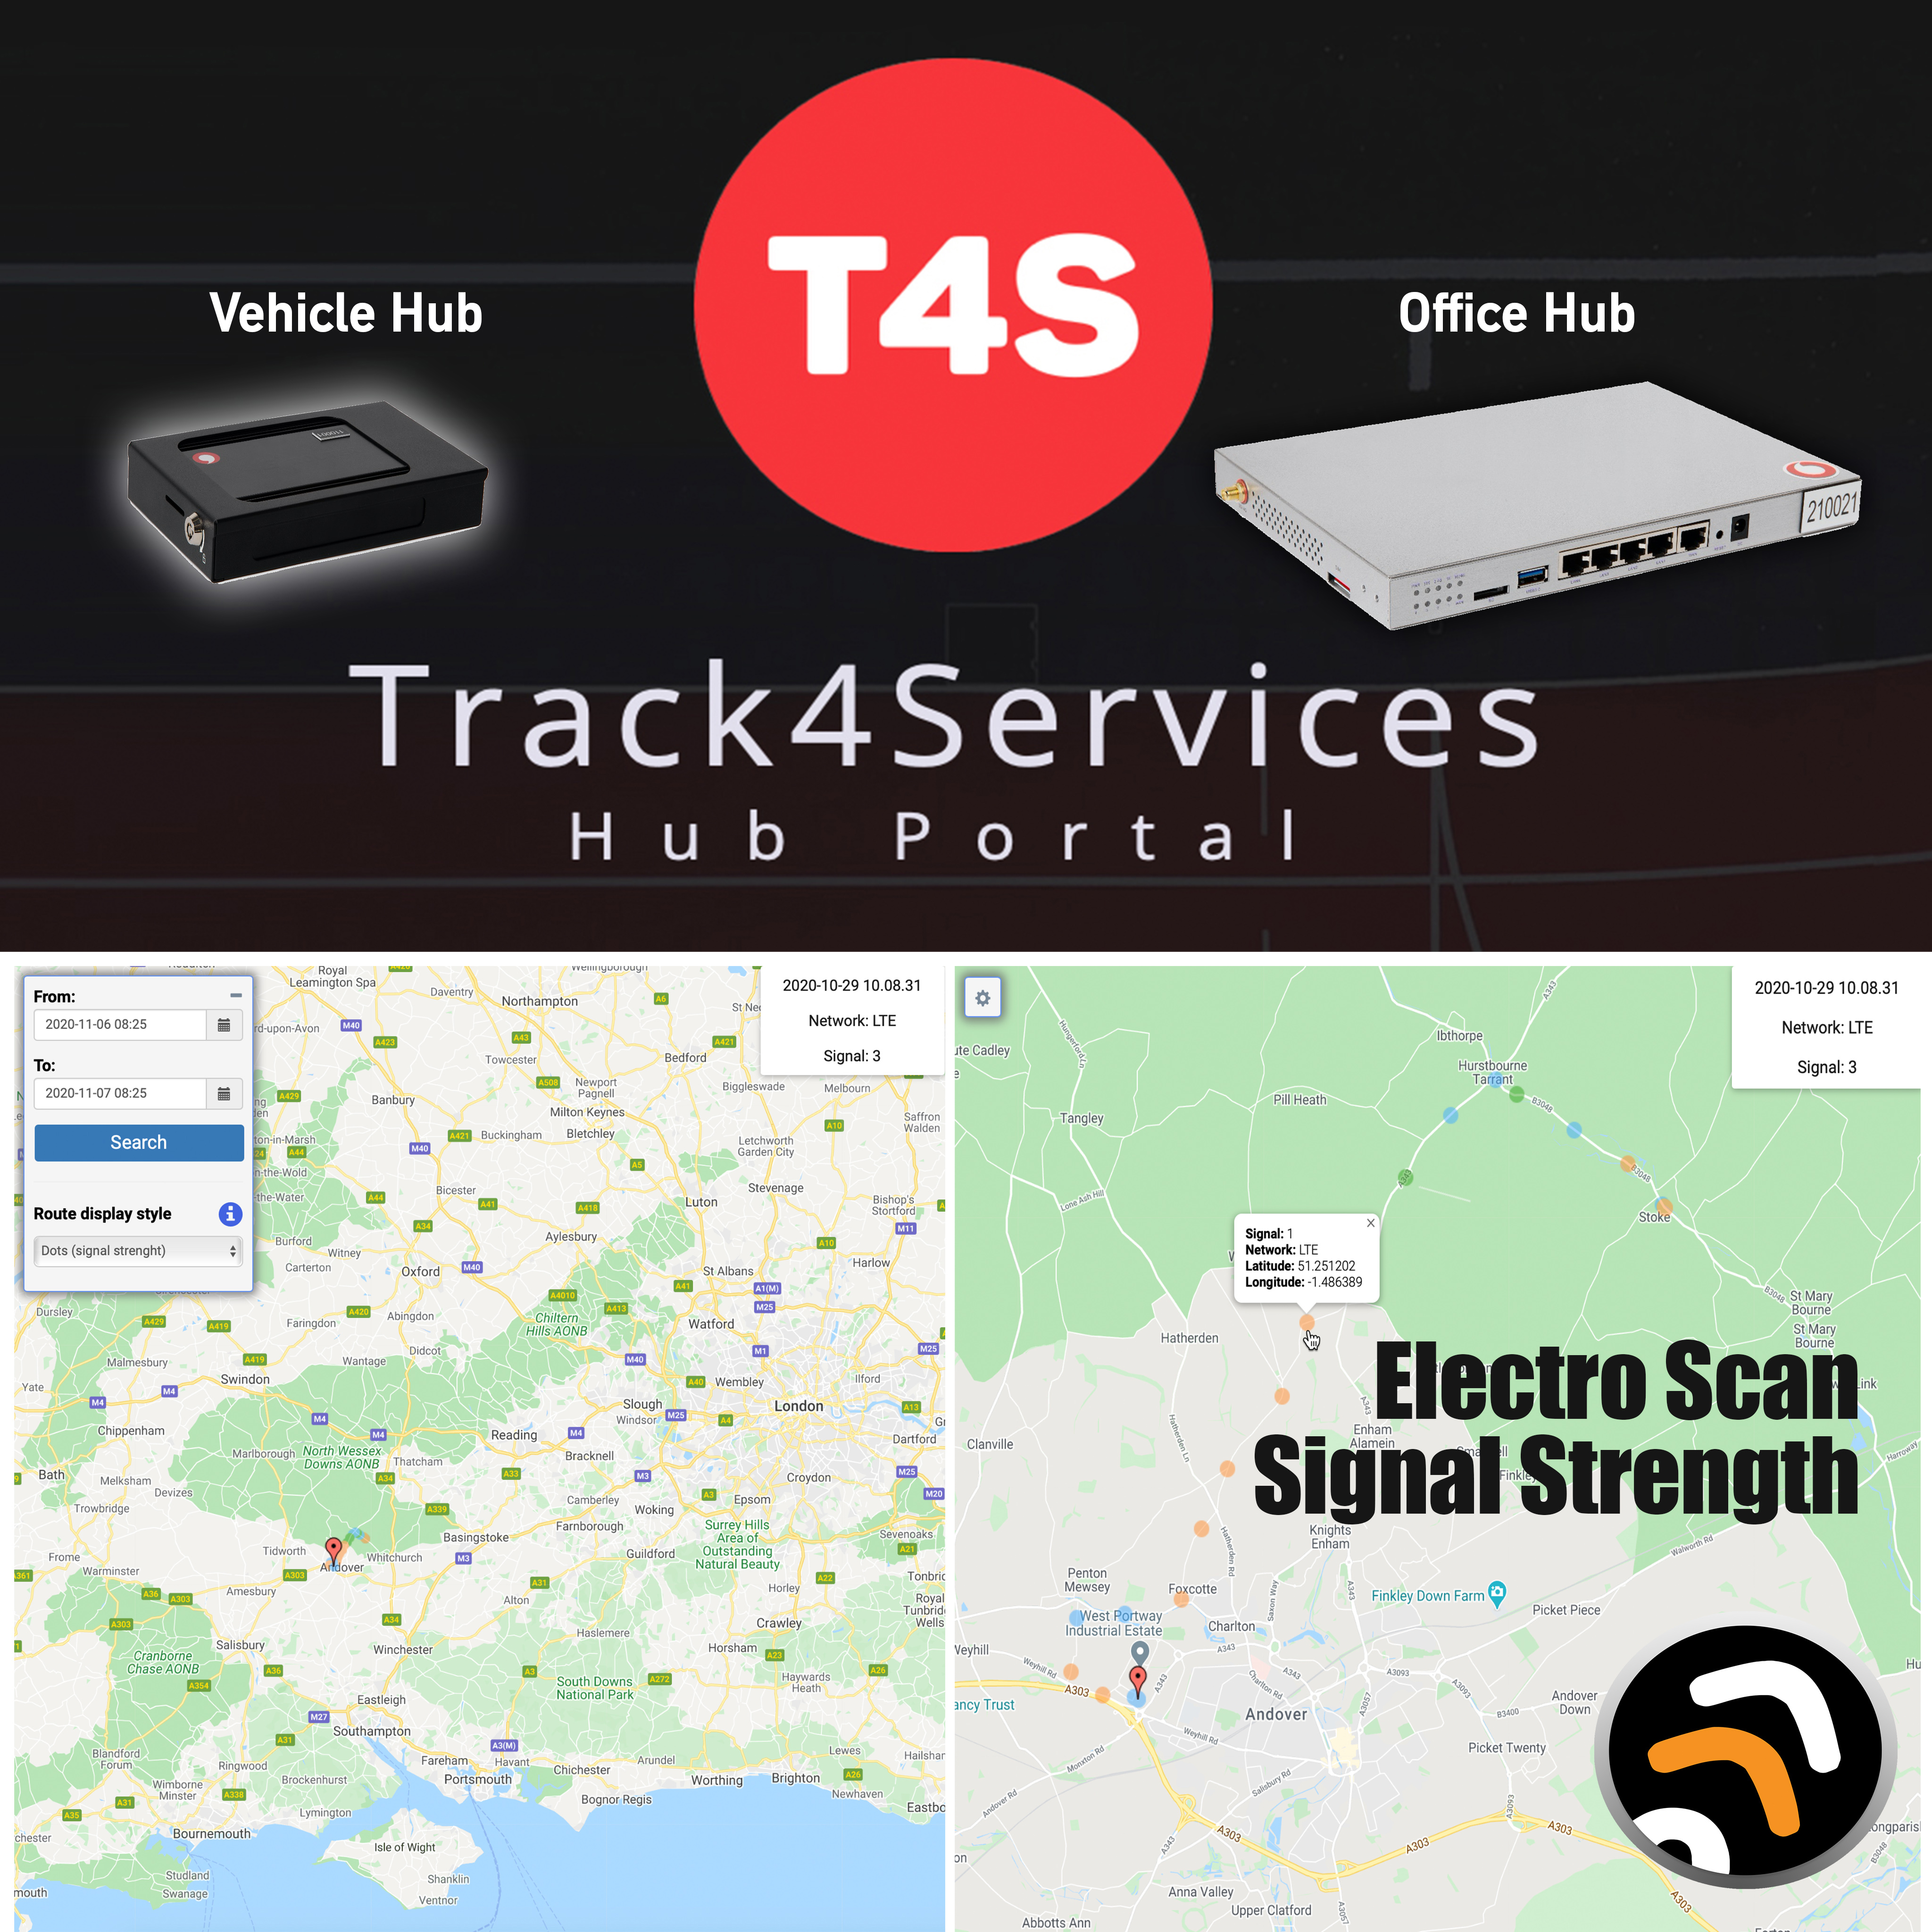 Track4Services hub portal